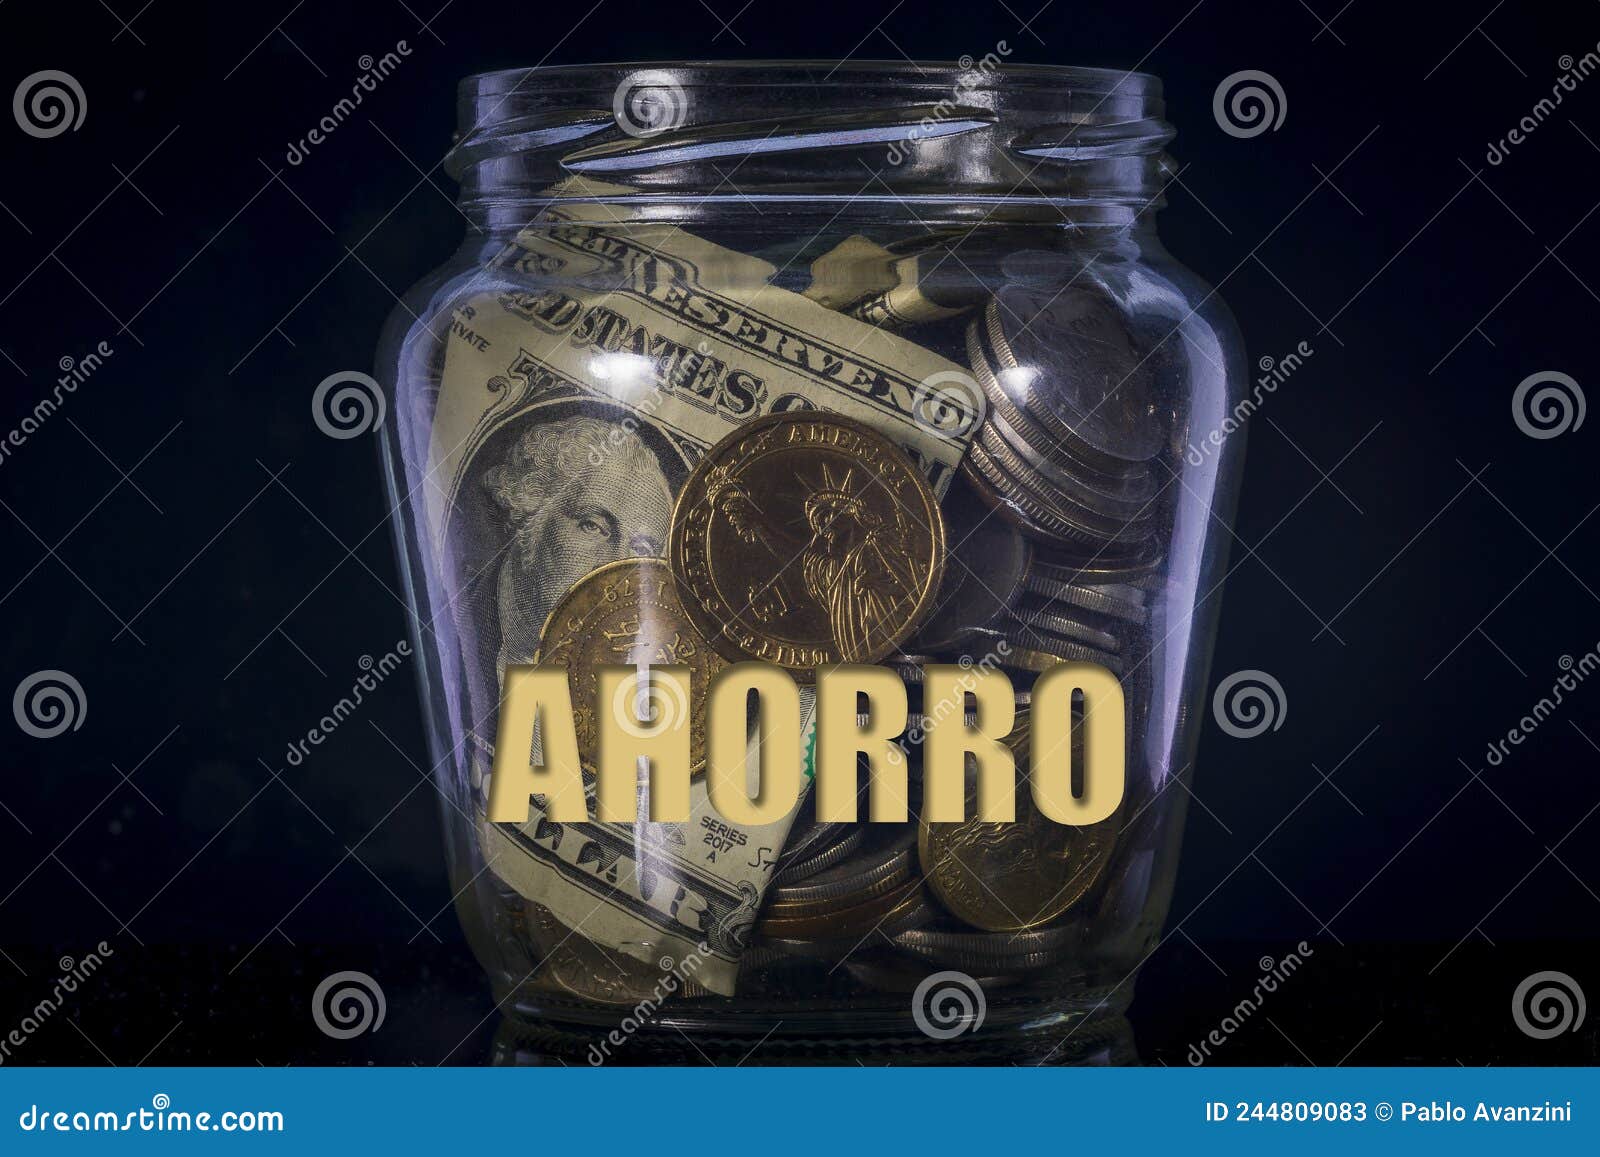 money jar with ahorro text